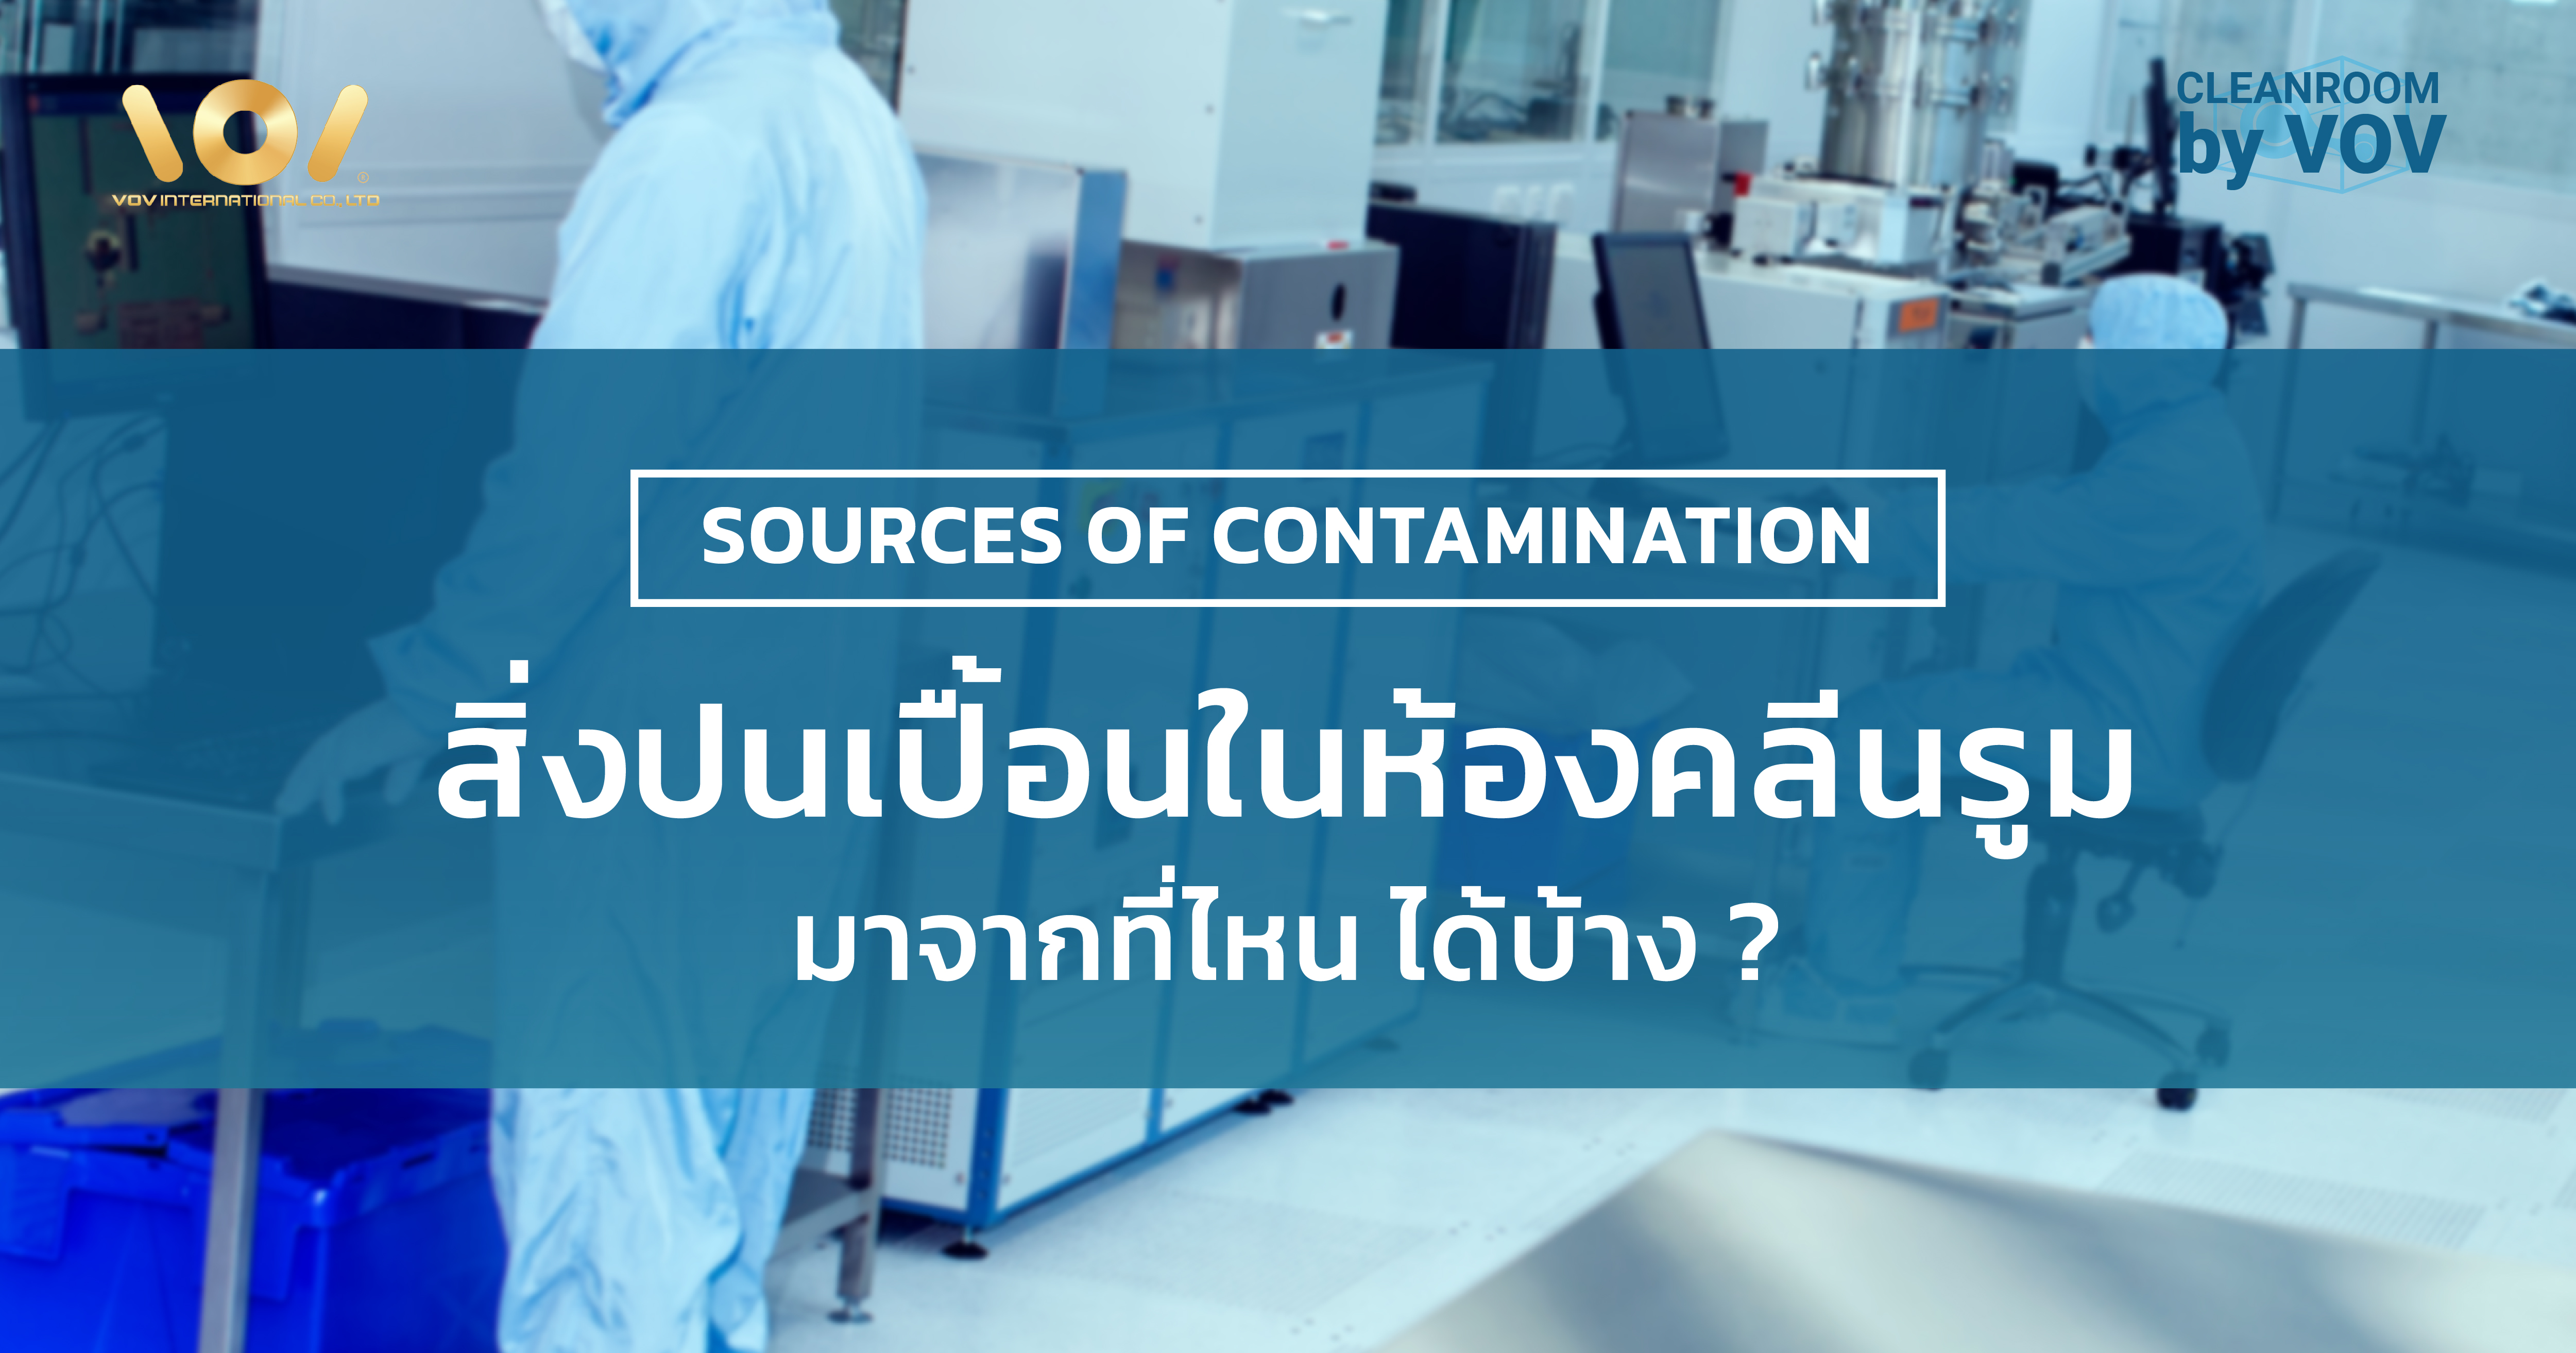 Contamination in cleanroom สิ่งปนเปื้อนในคลีนรูม มาจากไหนบ้าง?